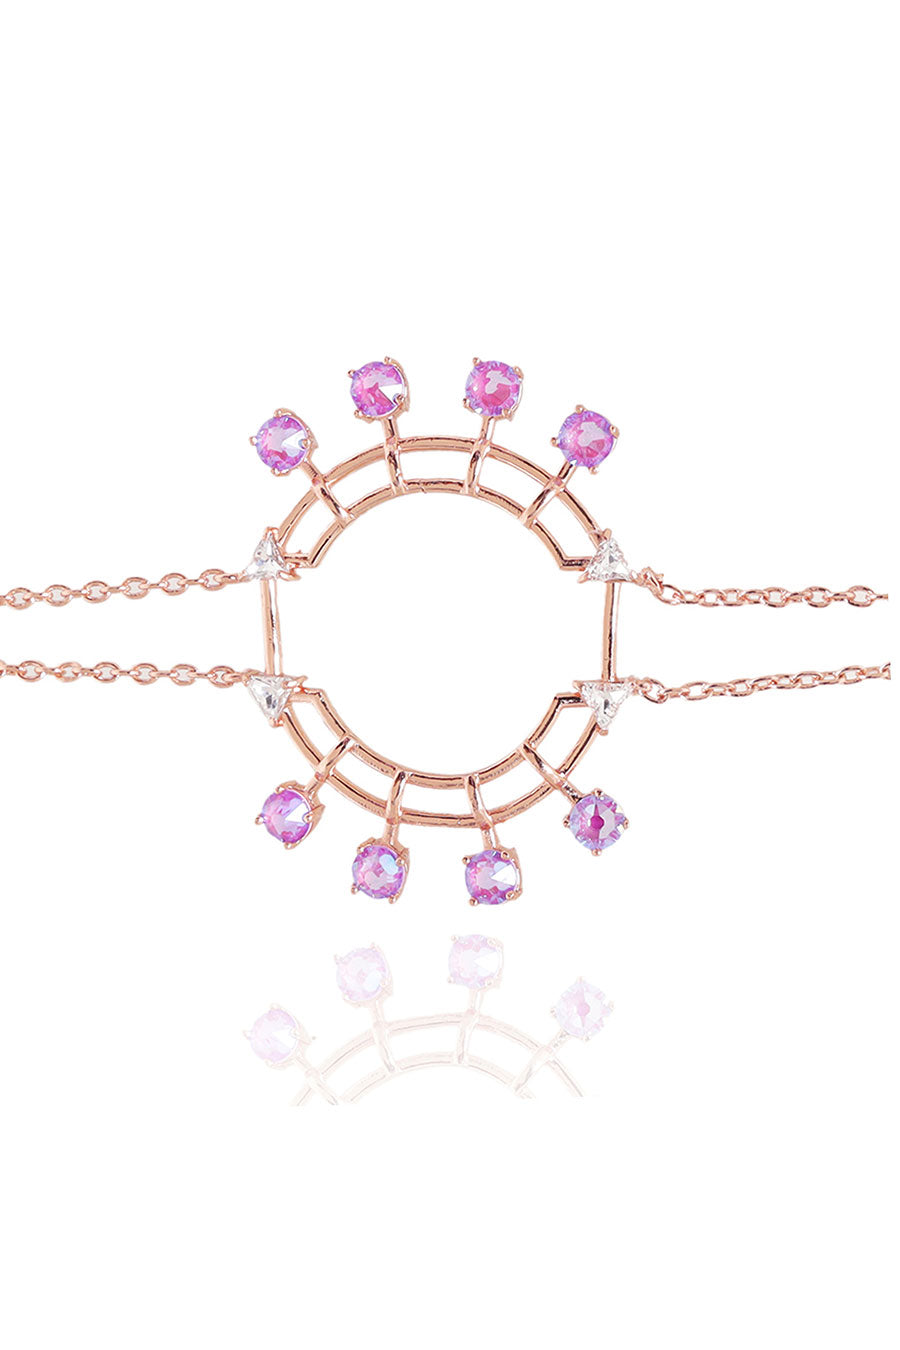 Colored Popsicles - Lilac Swarovski Tennis Bracelet